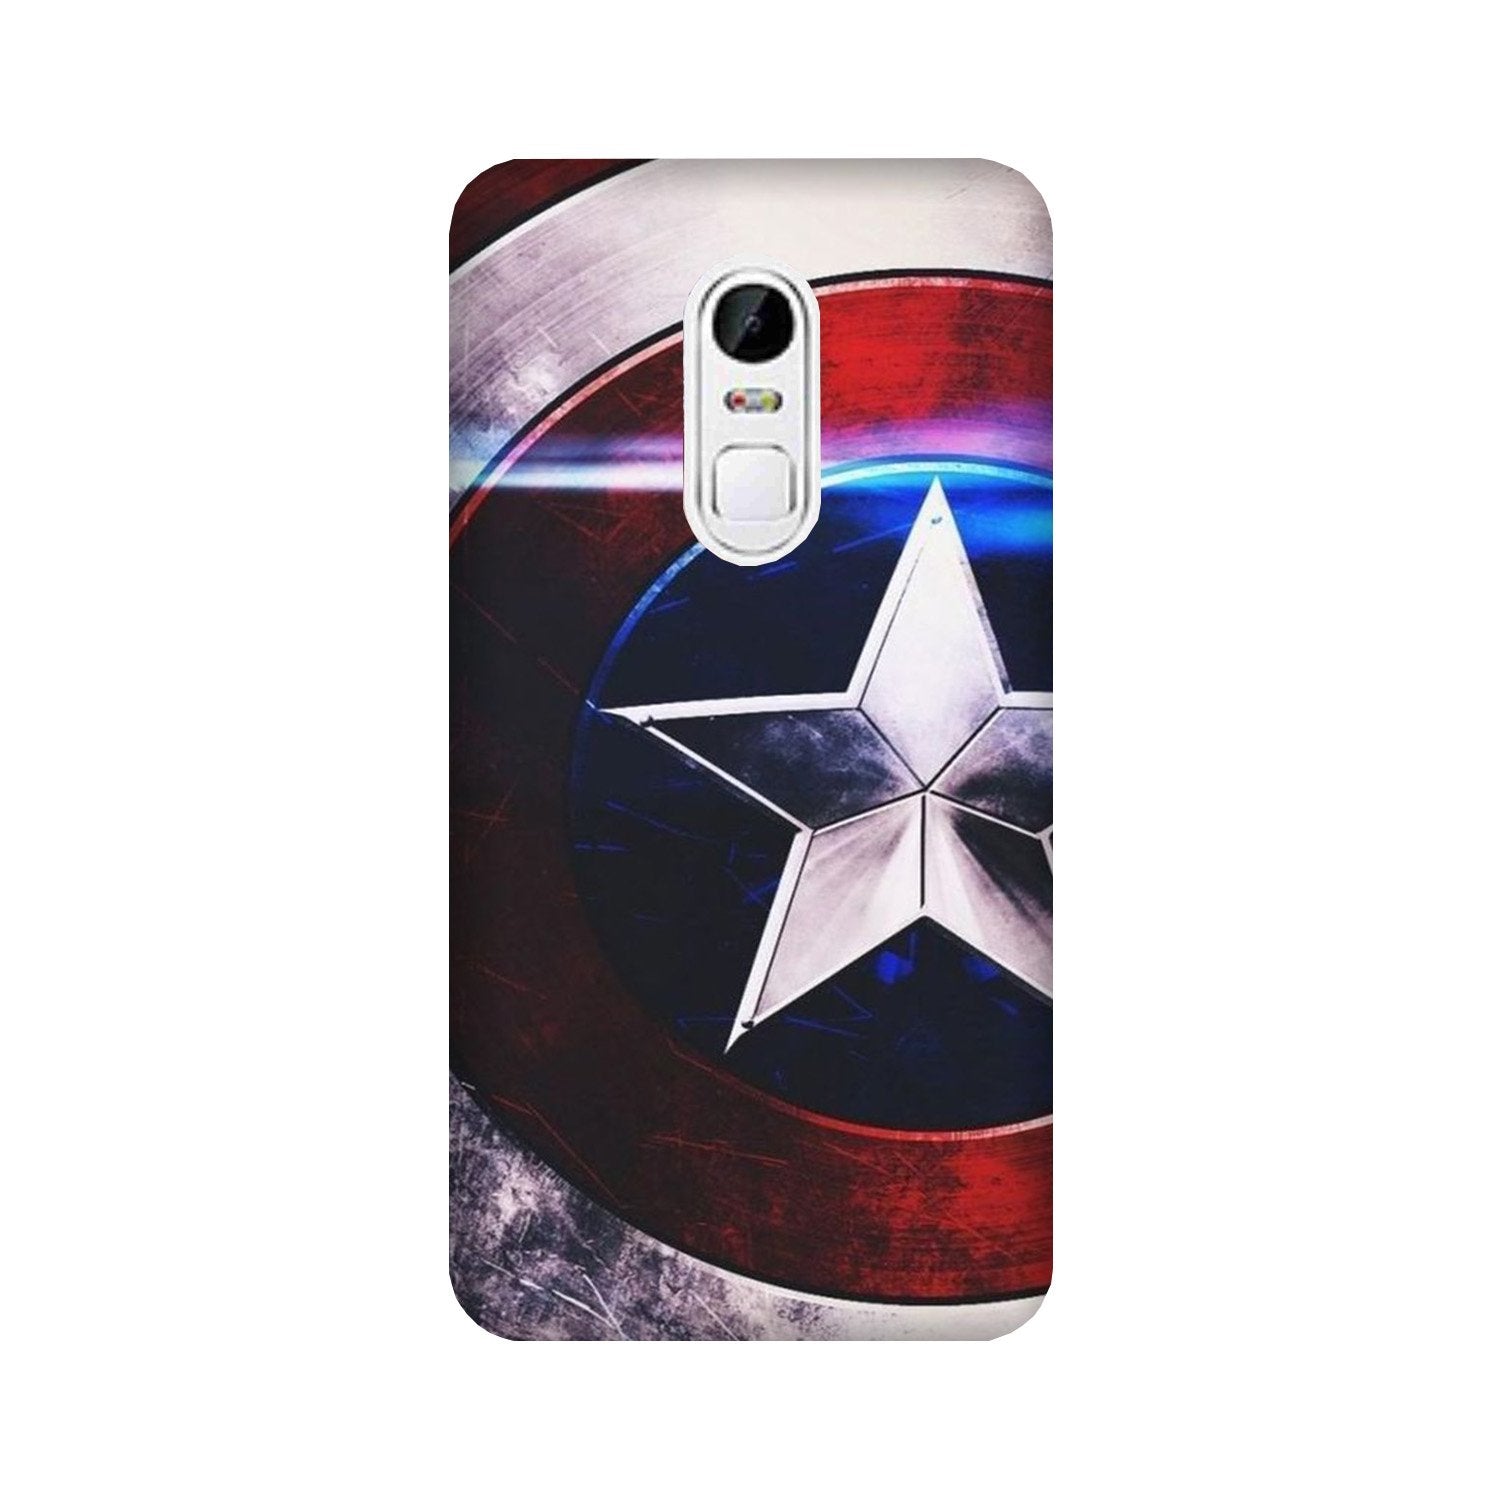 Captain America Shield Case for Lenovo Vibe X3 (Design No. 250)